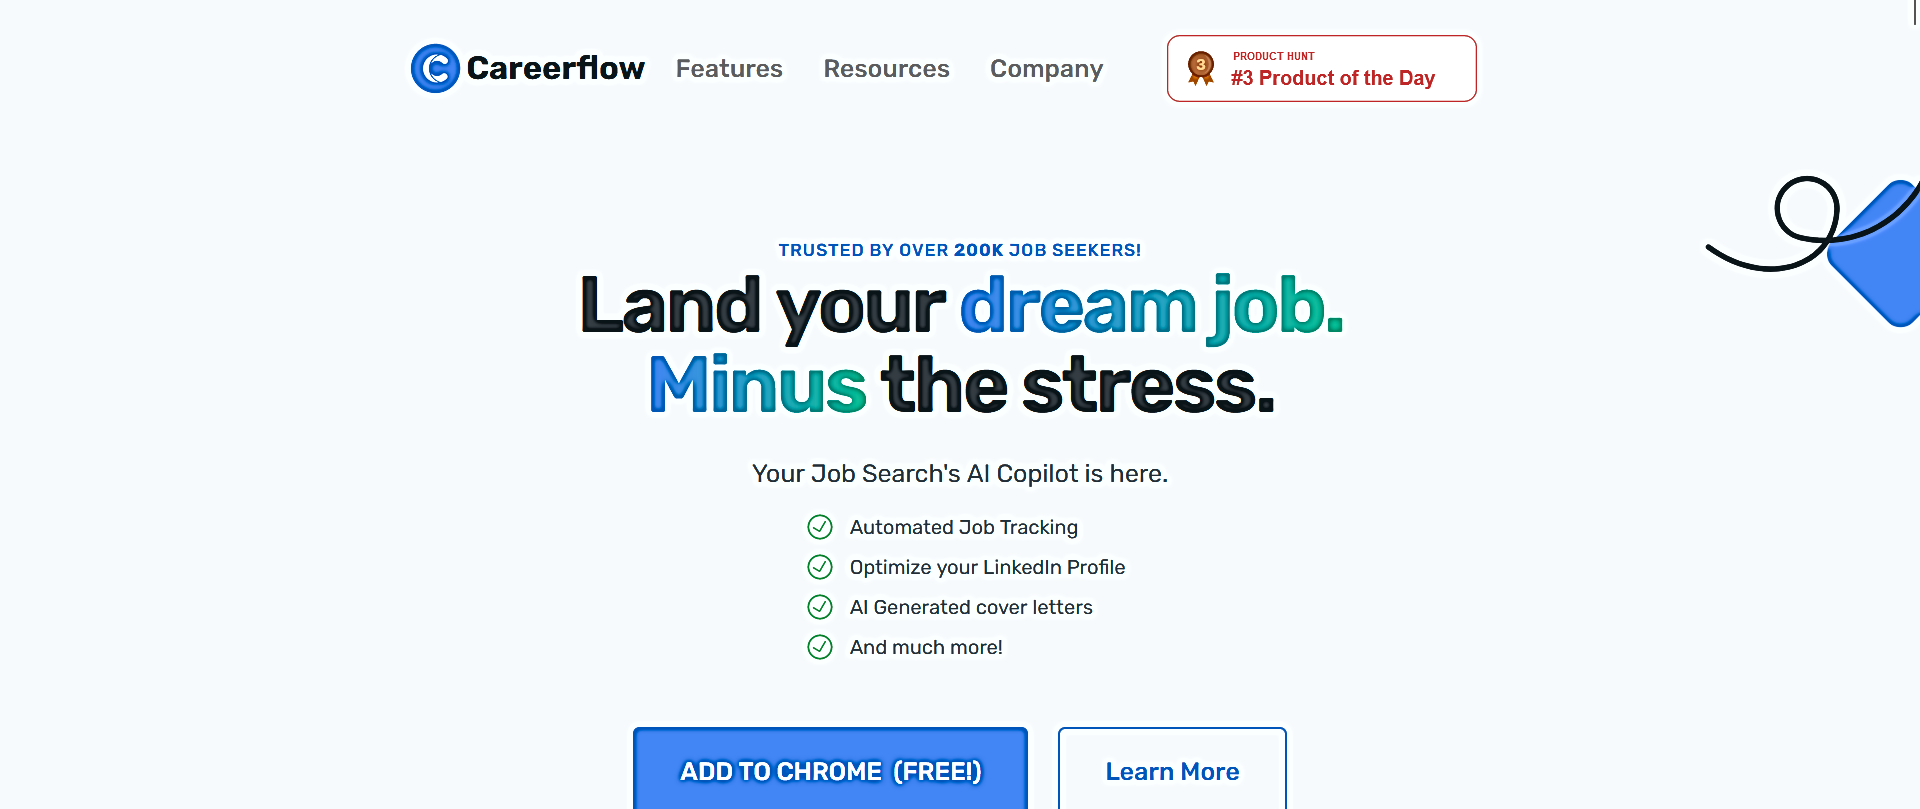 Careerflow featured